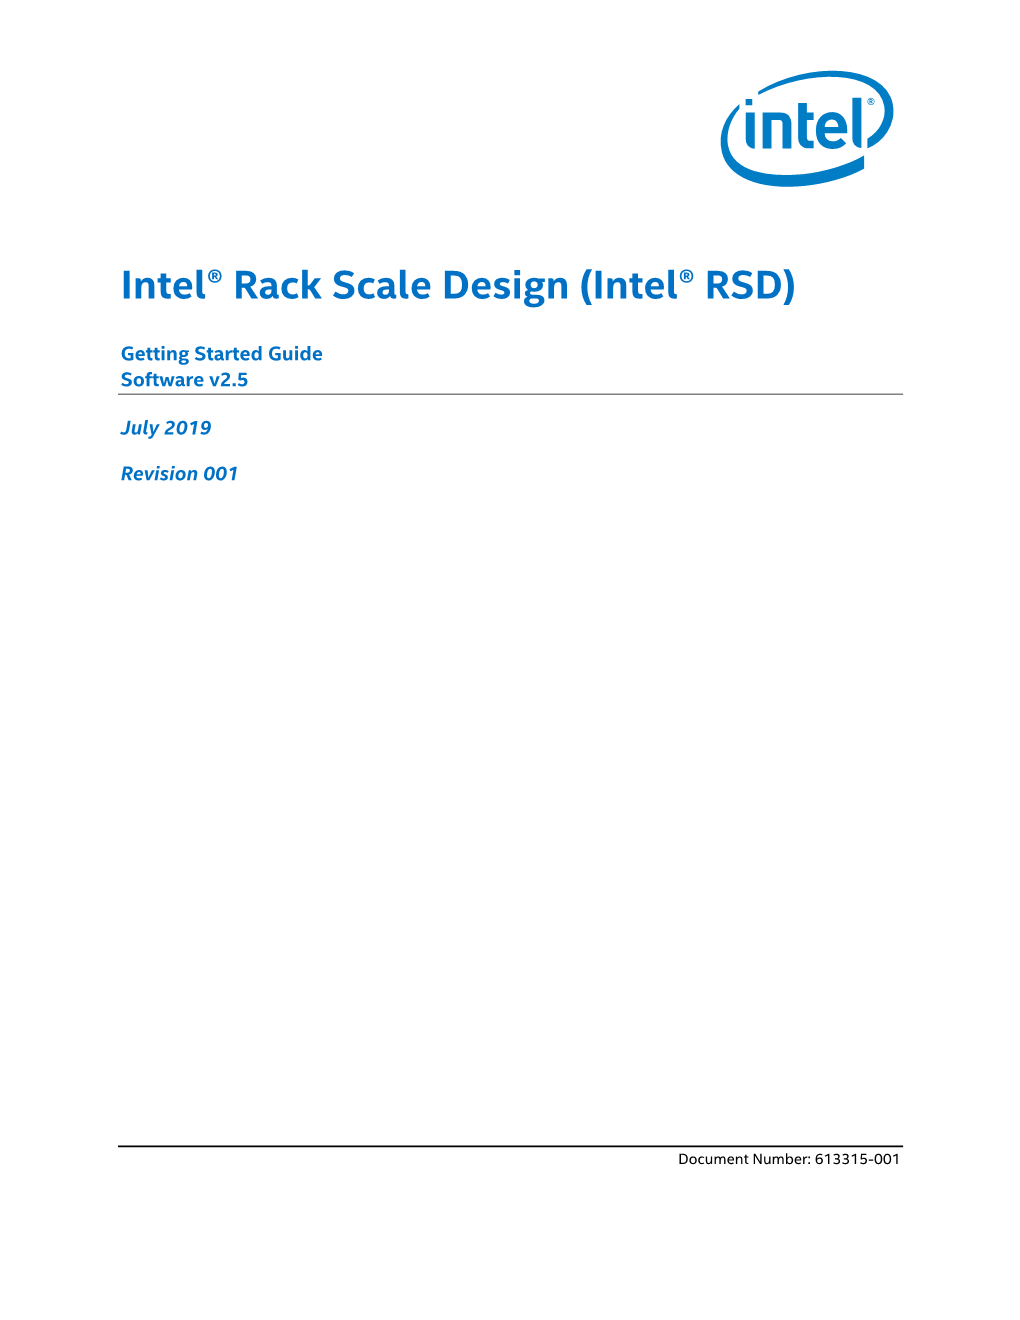 Intel® Rack Scale Design (Intel® RSD) V2.5: Conformance and Software